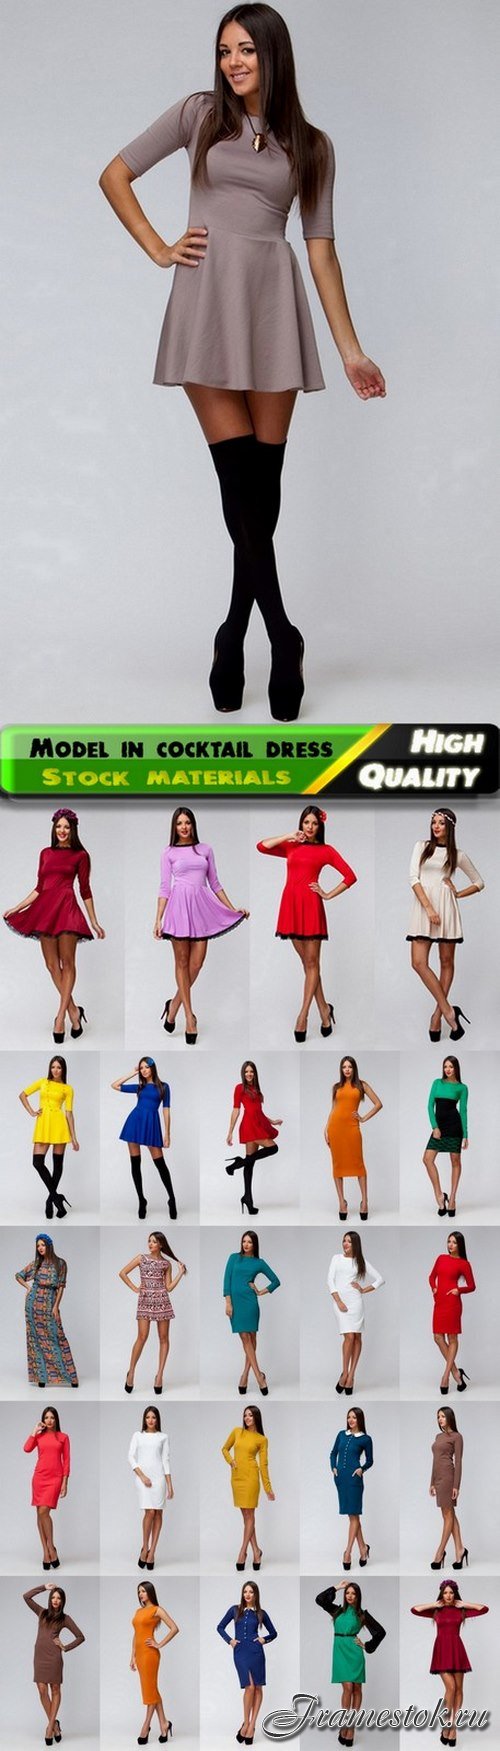 Stylish models posing in cocktail dresses - 25 HQ Jpg